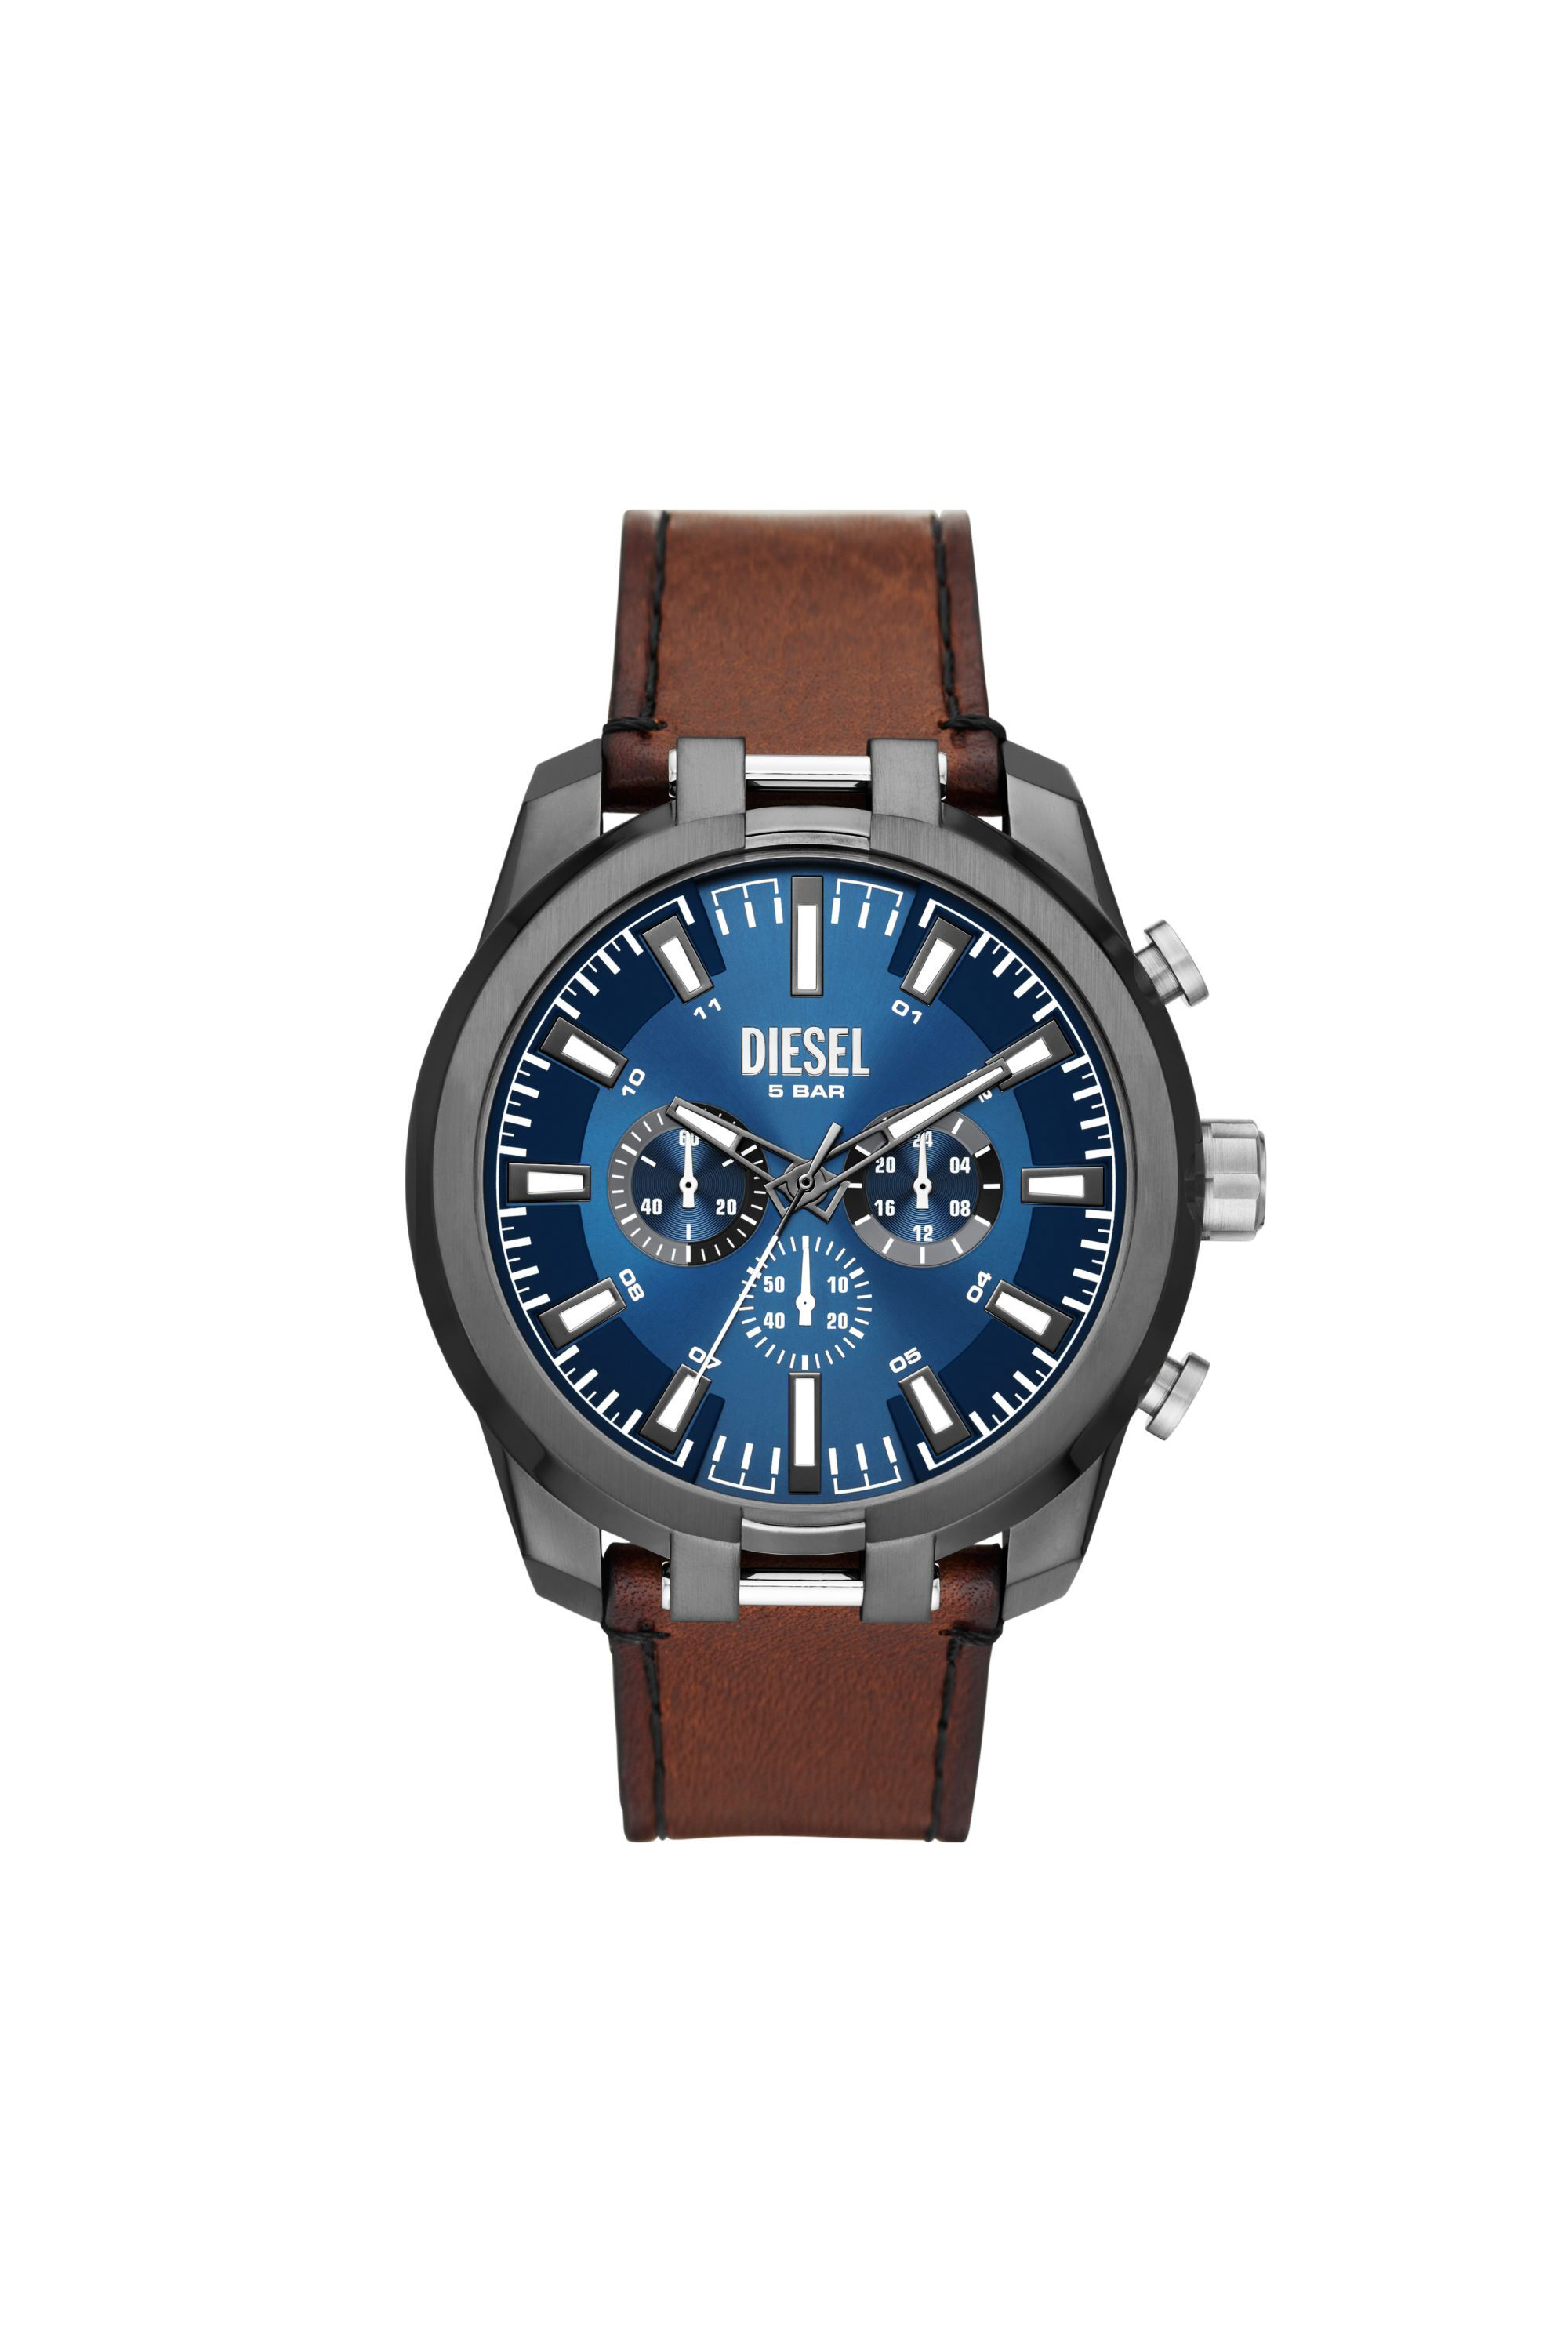 Diesel's 51mm Split watch, blue sunray dial | Diesel DZ4643